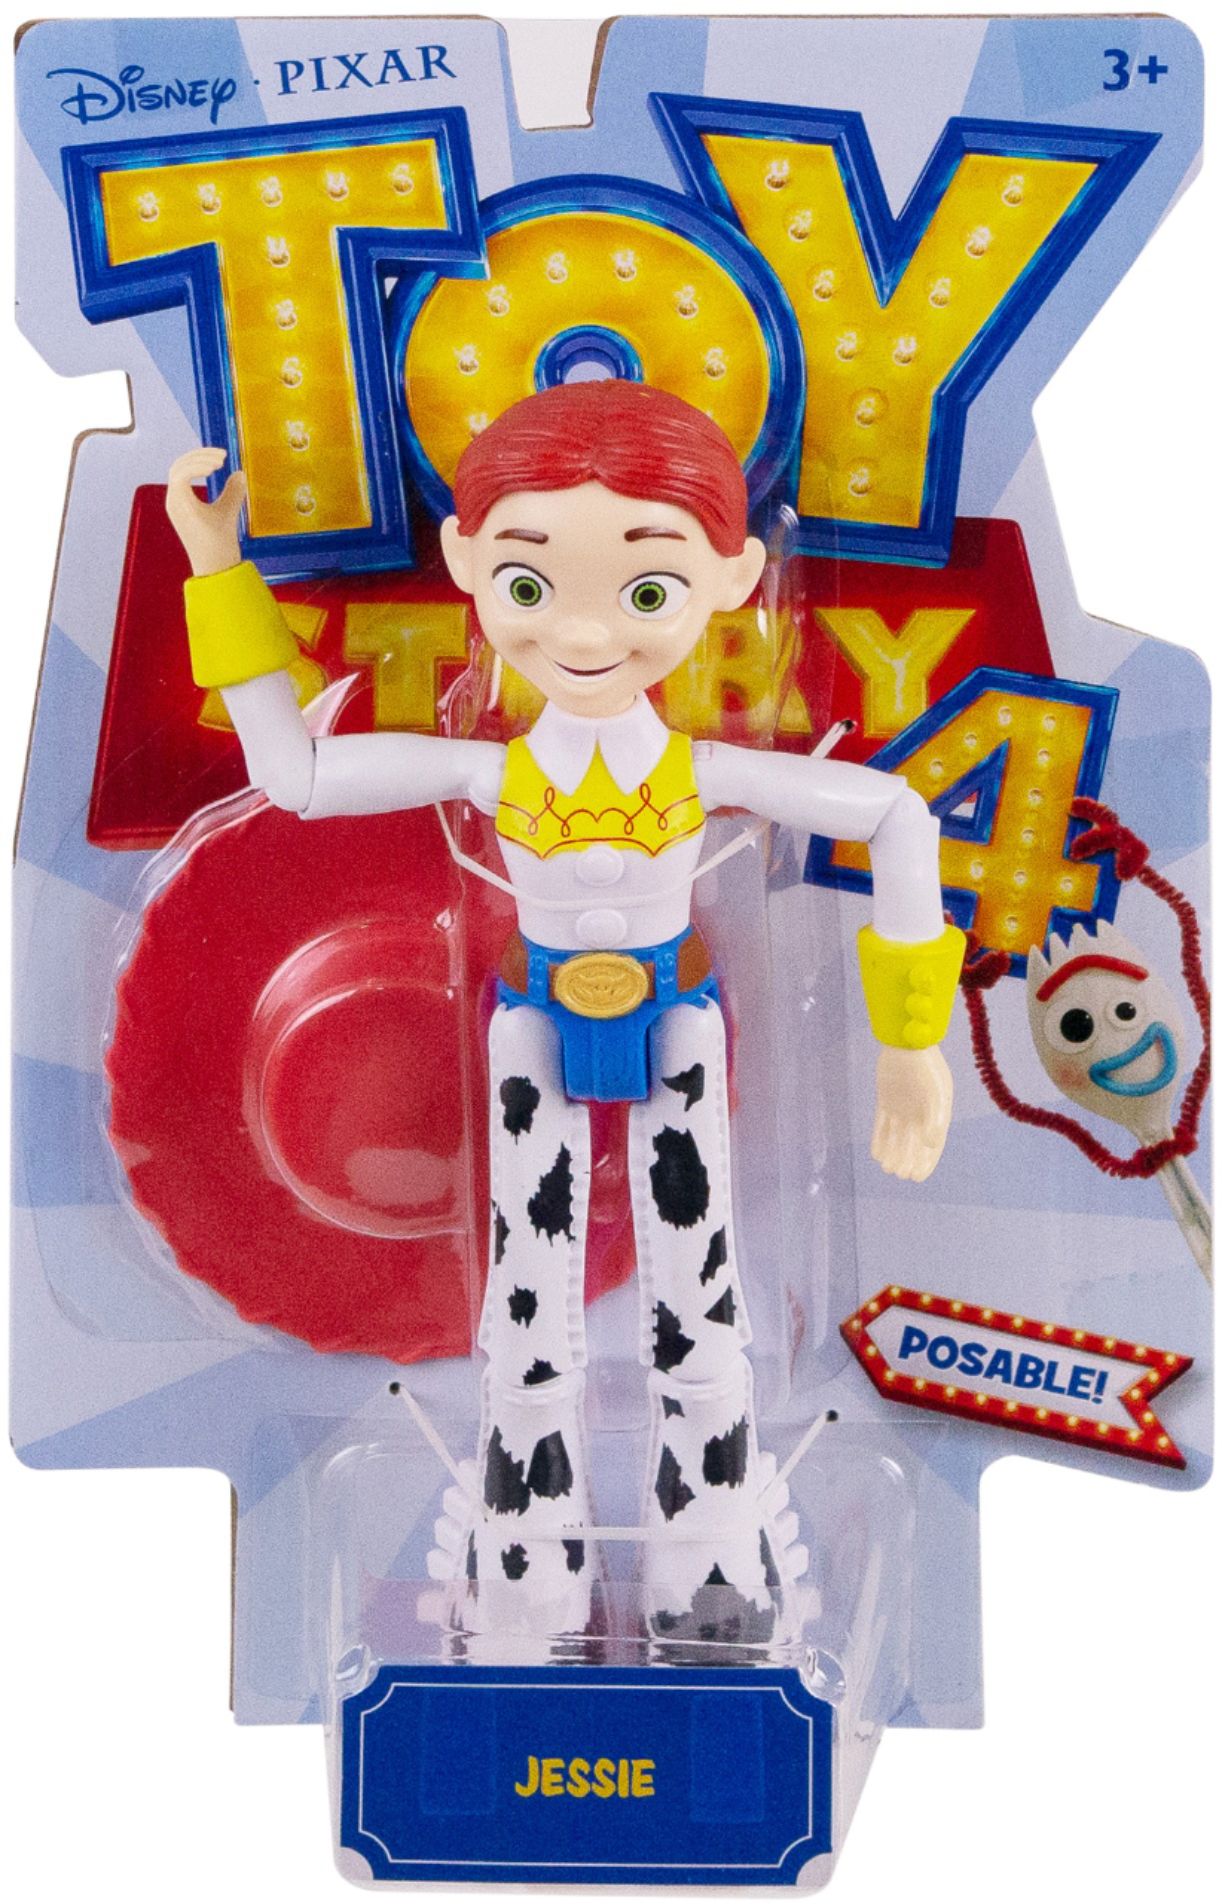 Disney Toy Story 4 Mini Figure Styles May Vary GCY17 - Best Buy